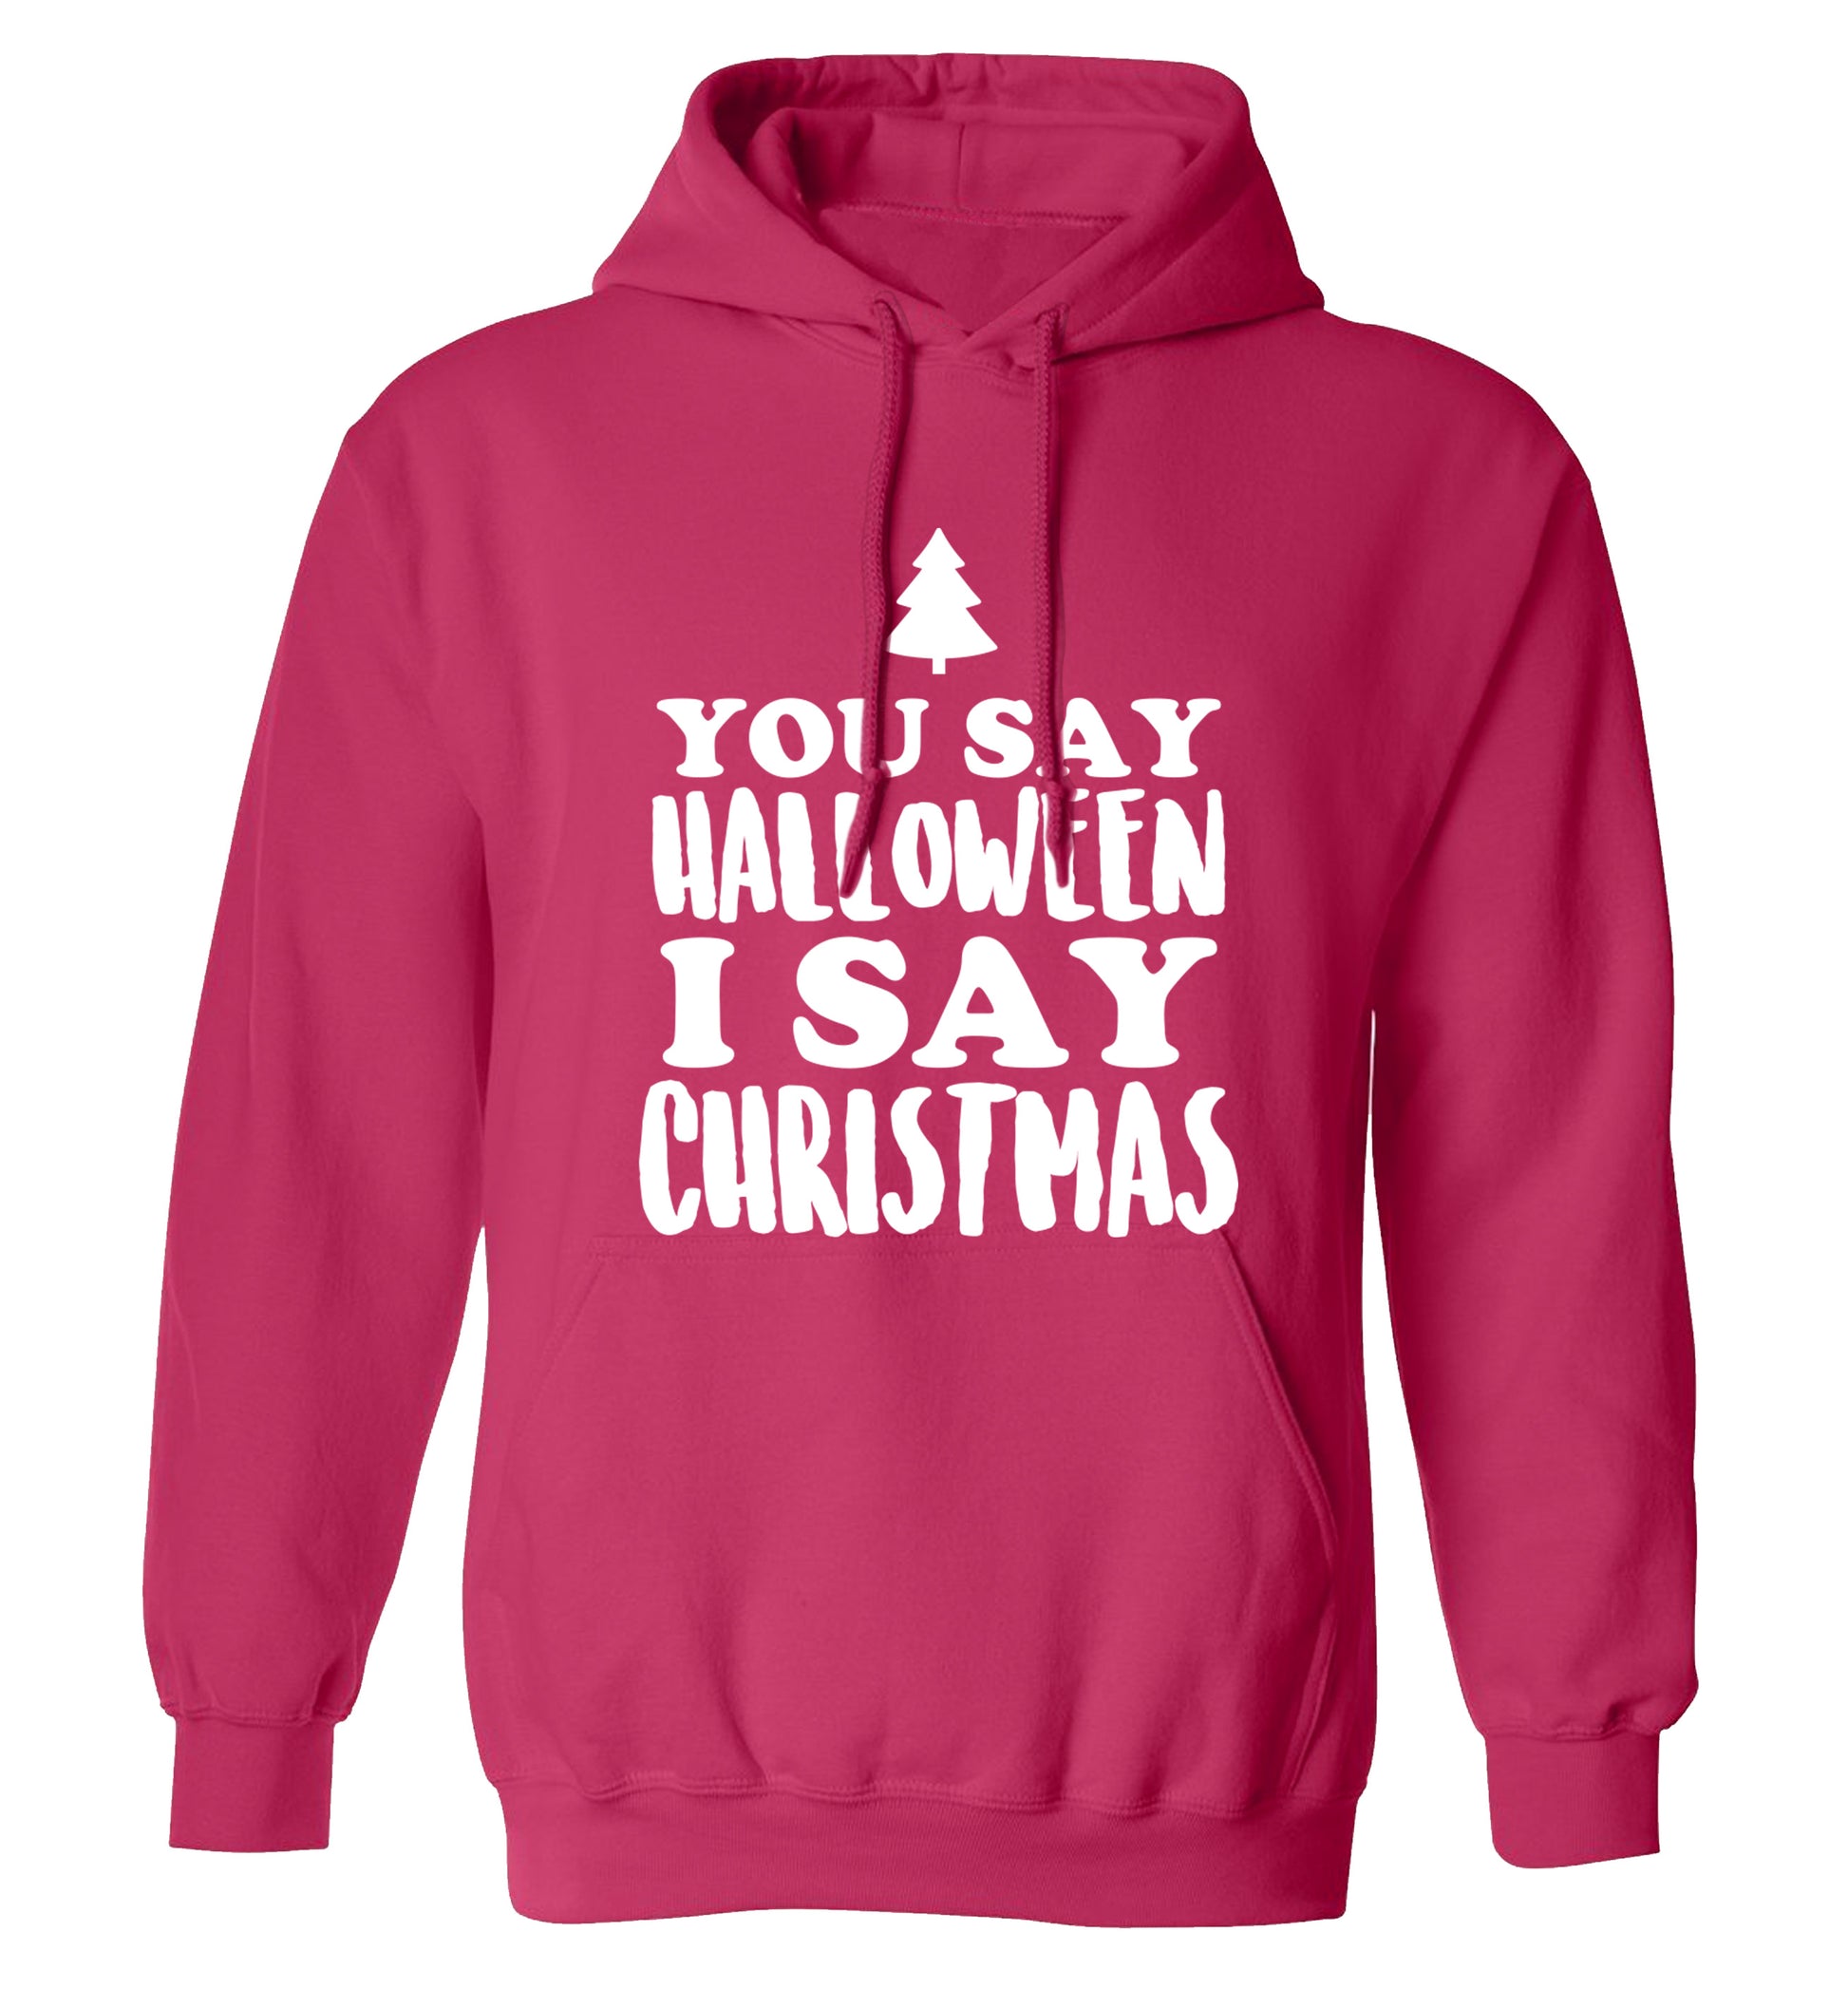 You say halloween I say christmas! adults unisex pink hoodie 2XL